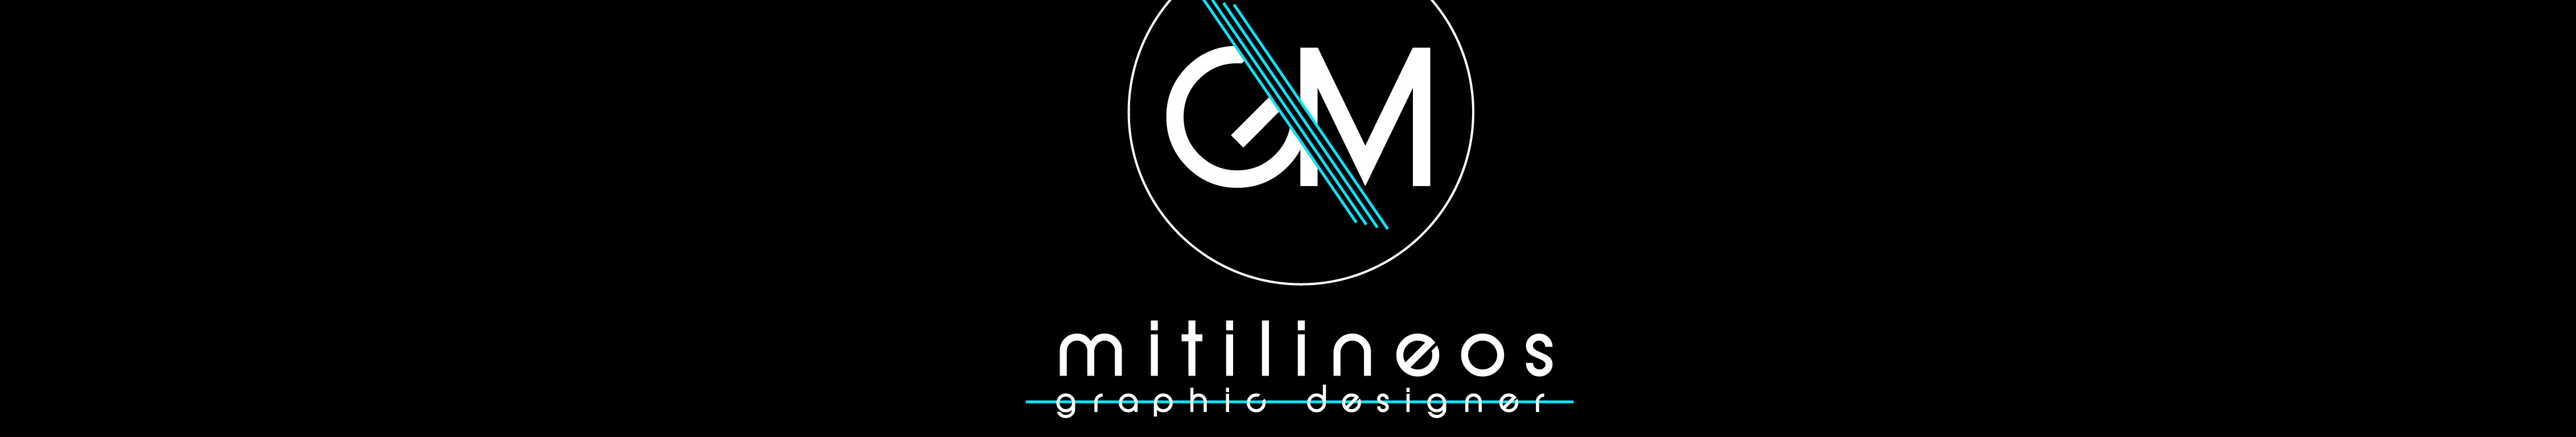 George Mitilineos's profile banner